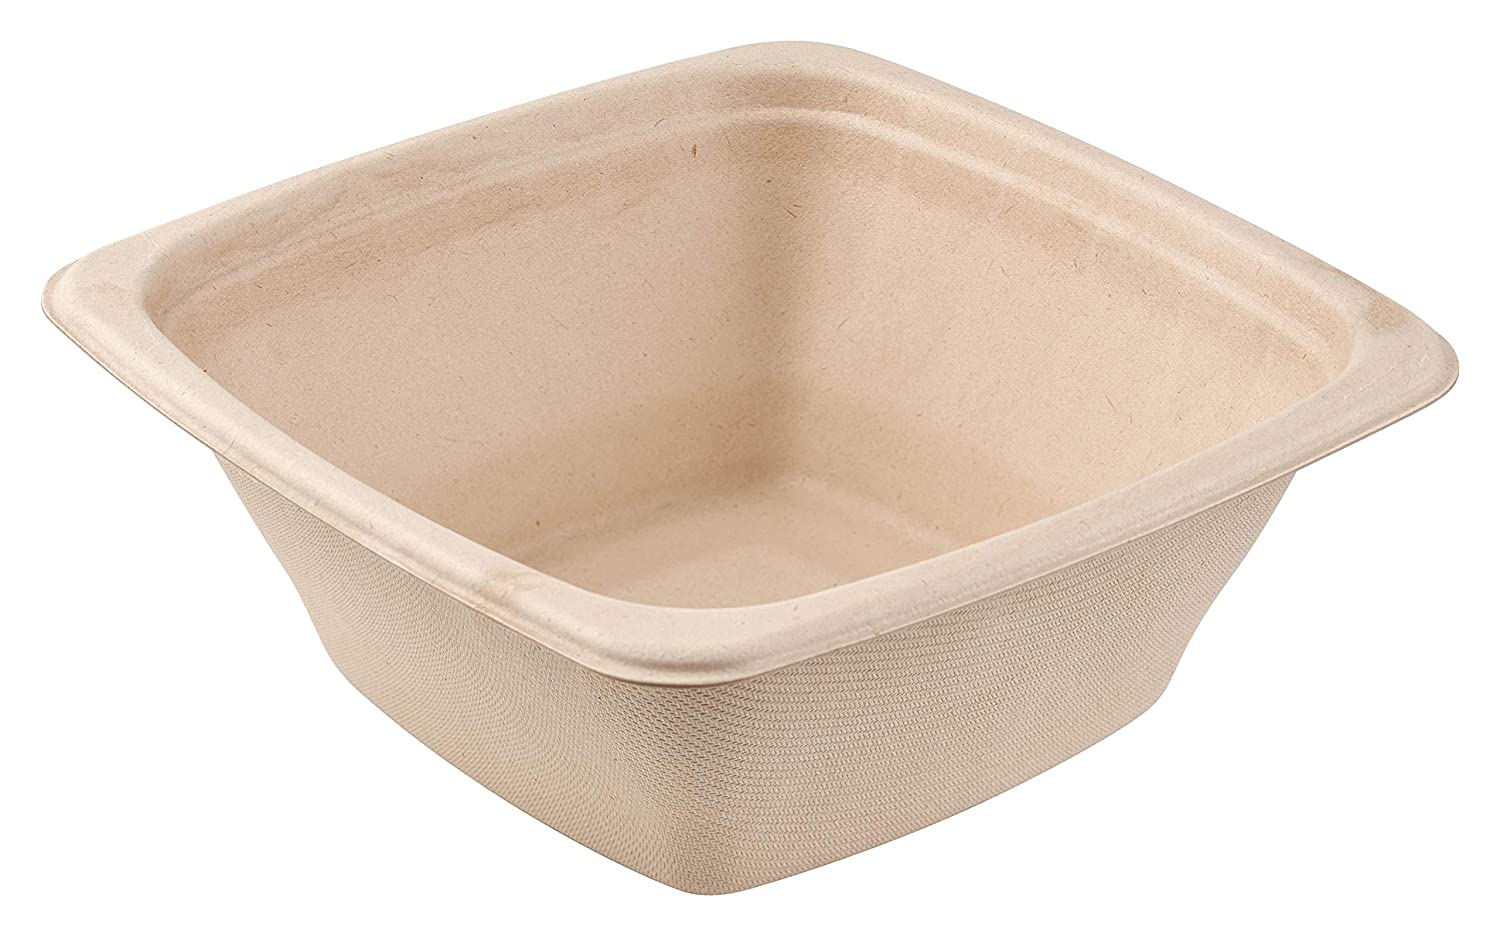 42oz Eco Friendly Disposable Square Bowls Compostable Container